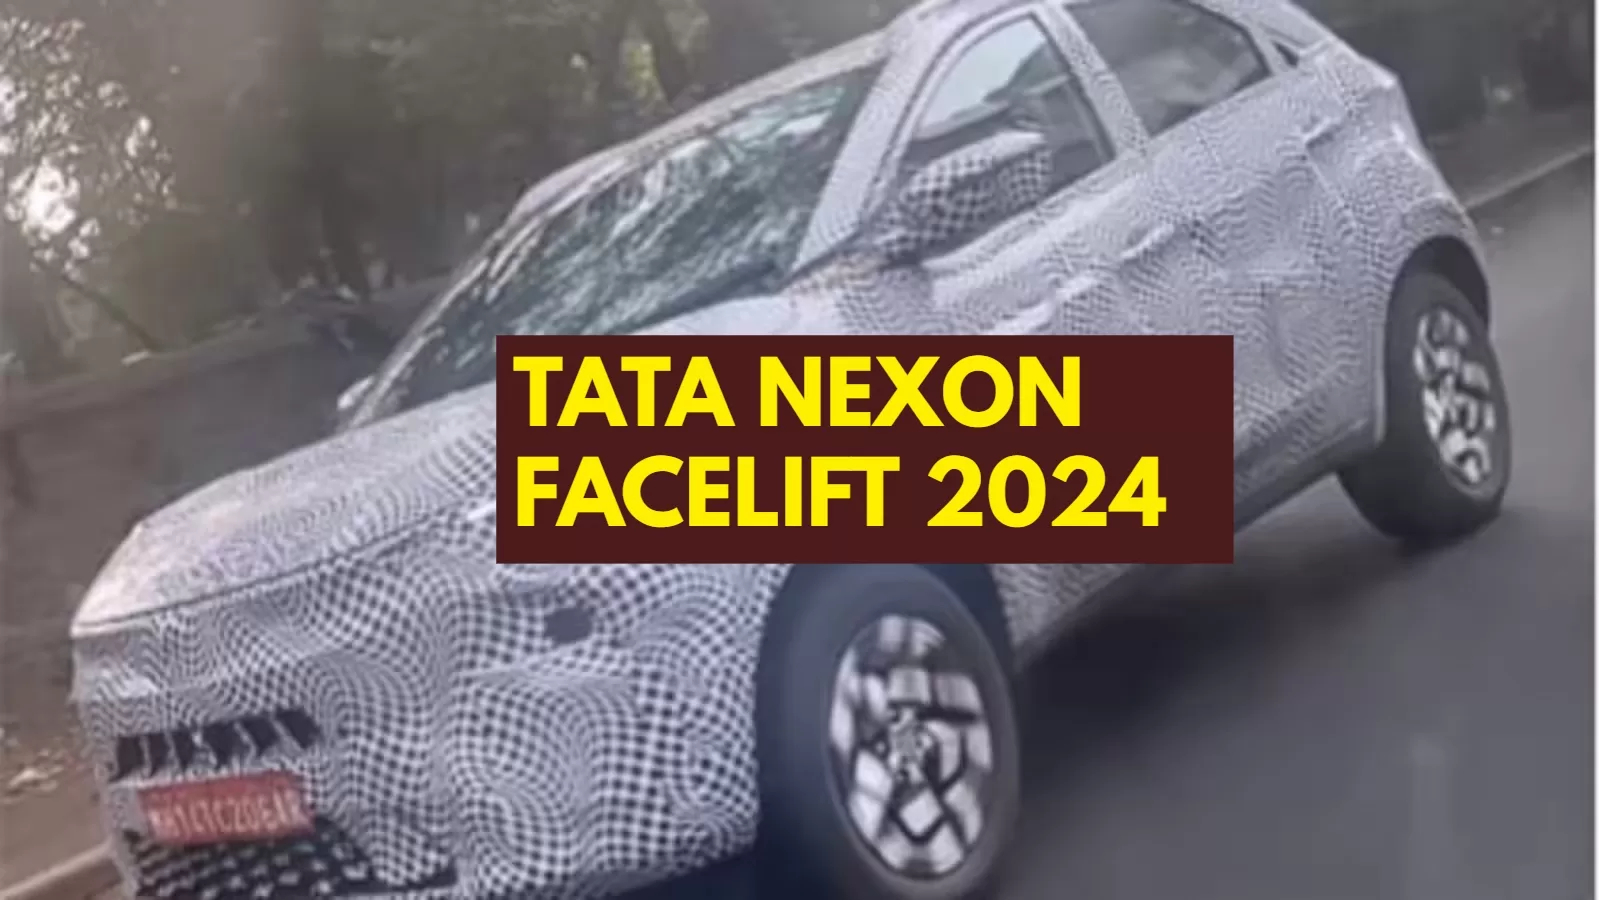 Tata Nexon facelift 2024